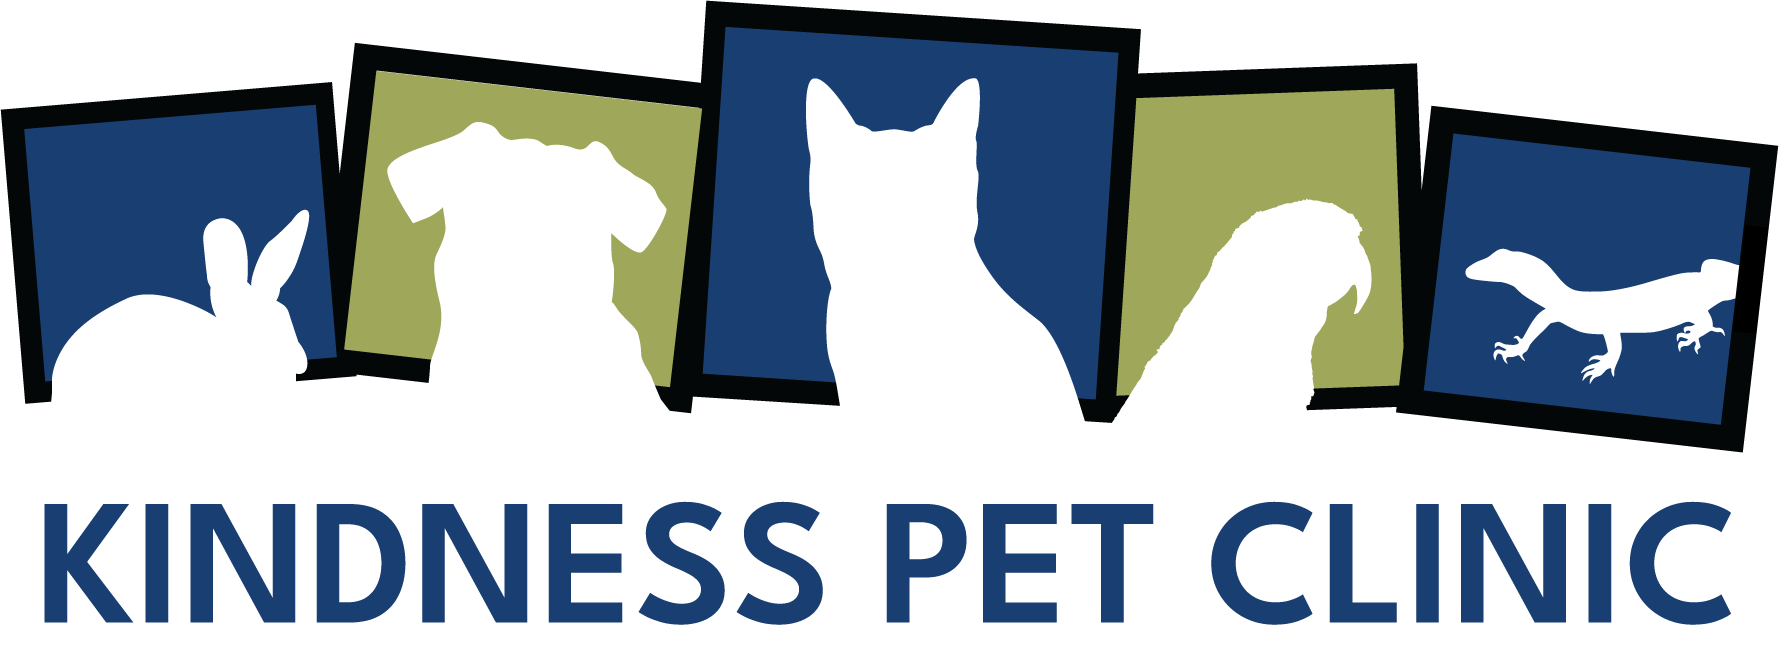 Kindness Pet Clinic Logo